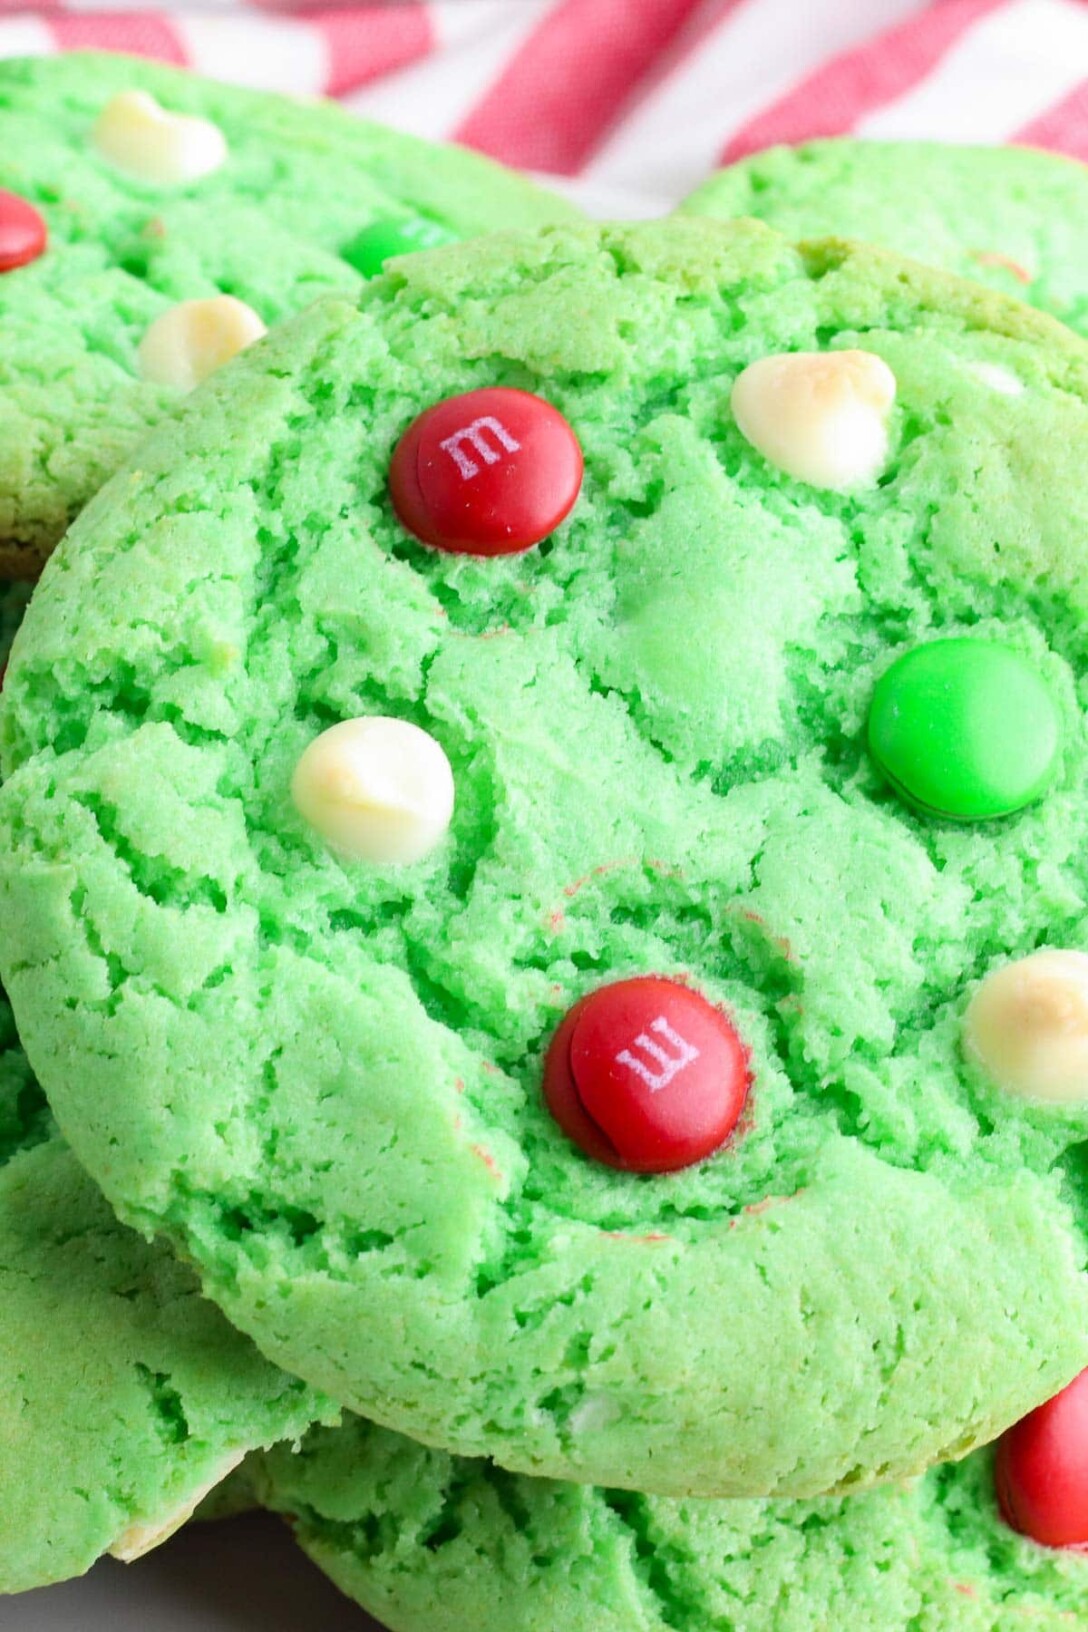 Cake Mix Cookies - an easy Christmas cookies recipe